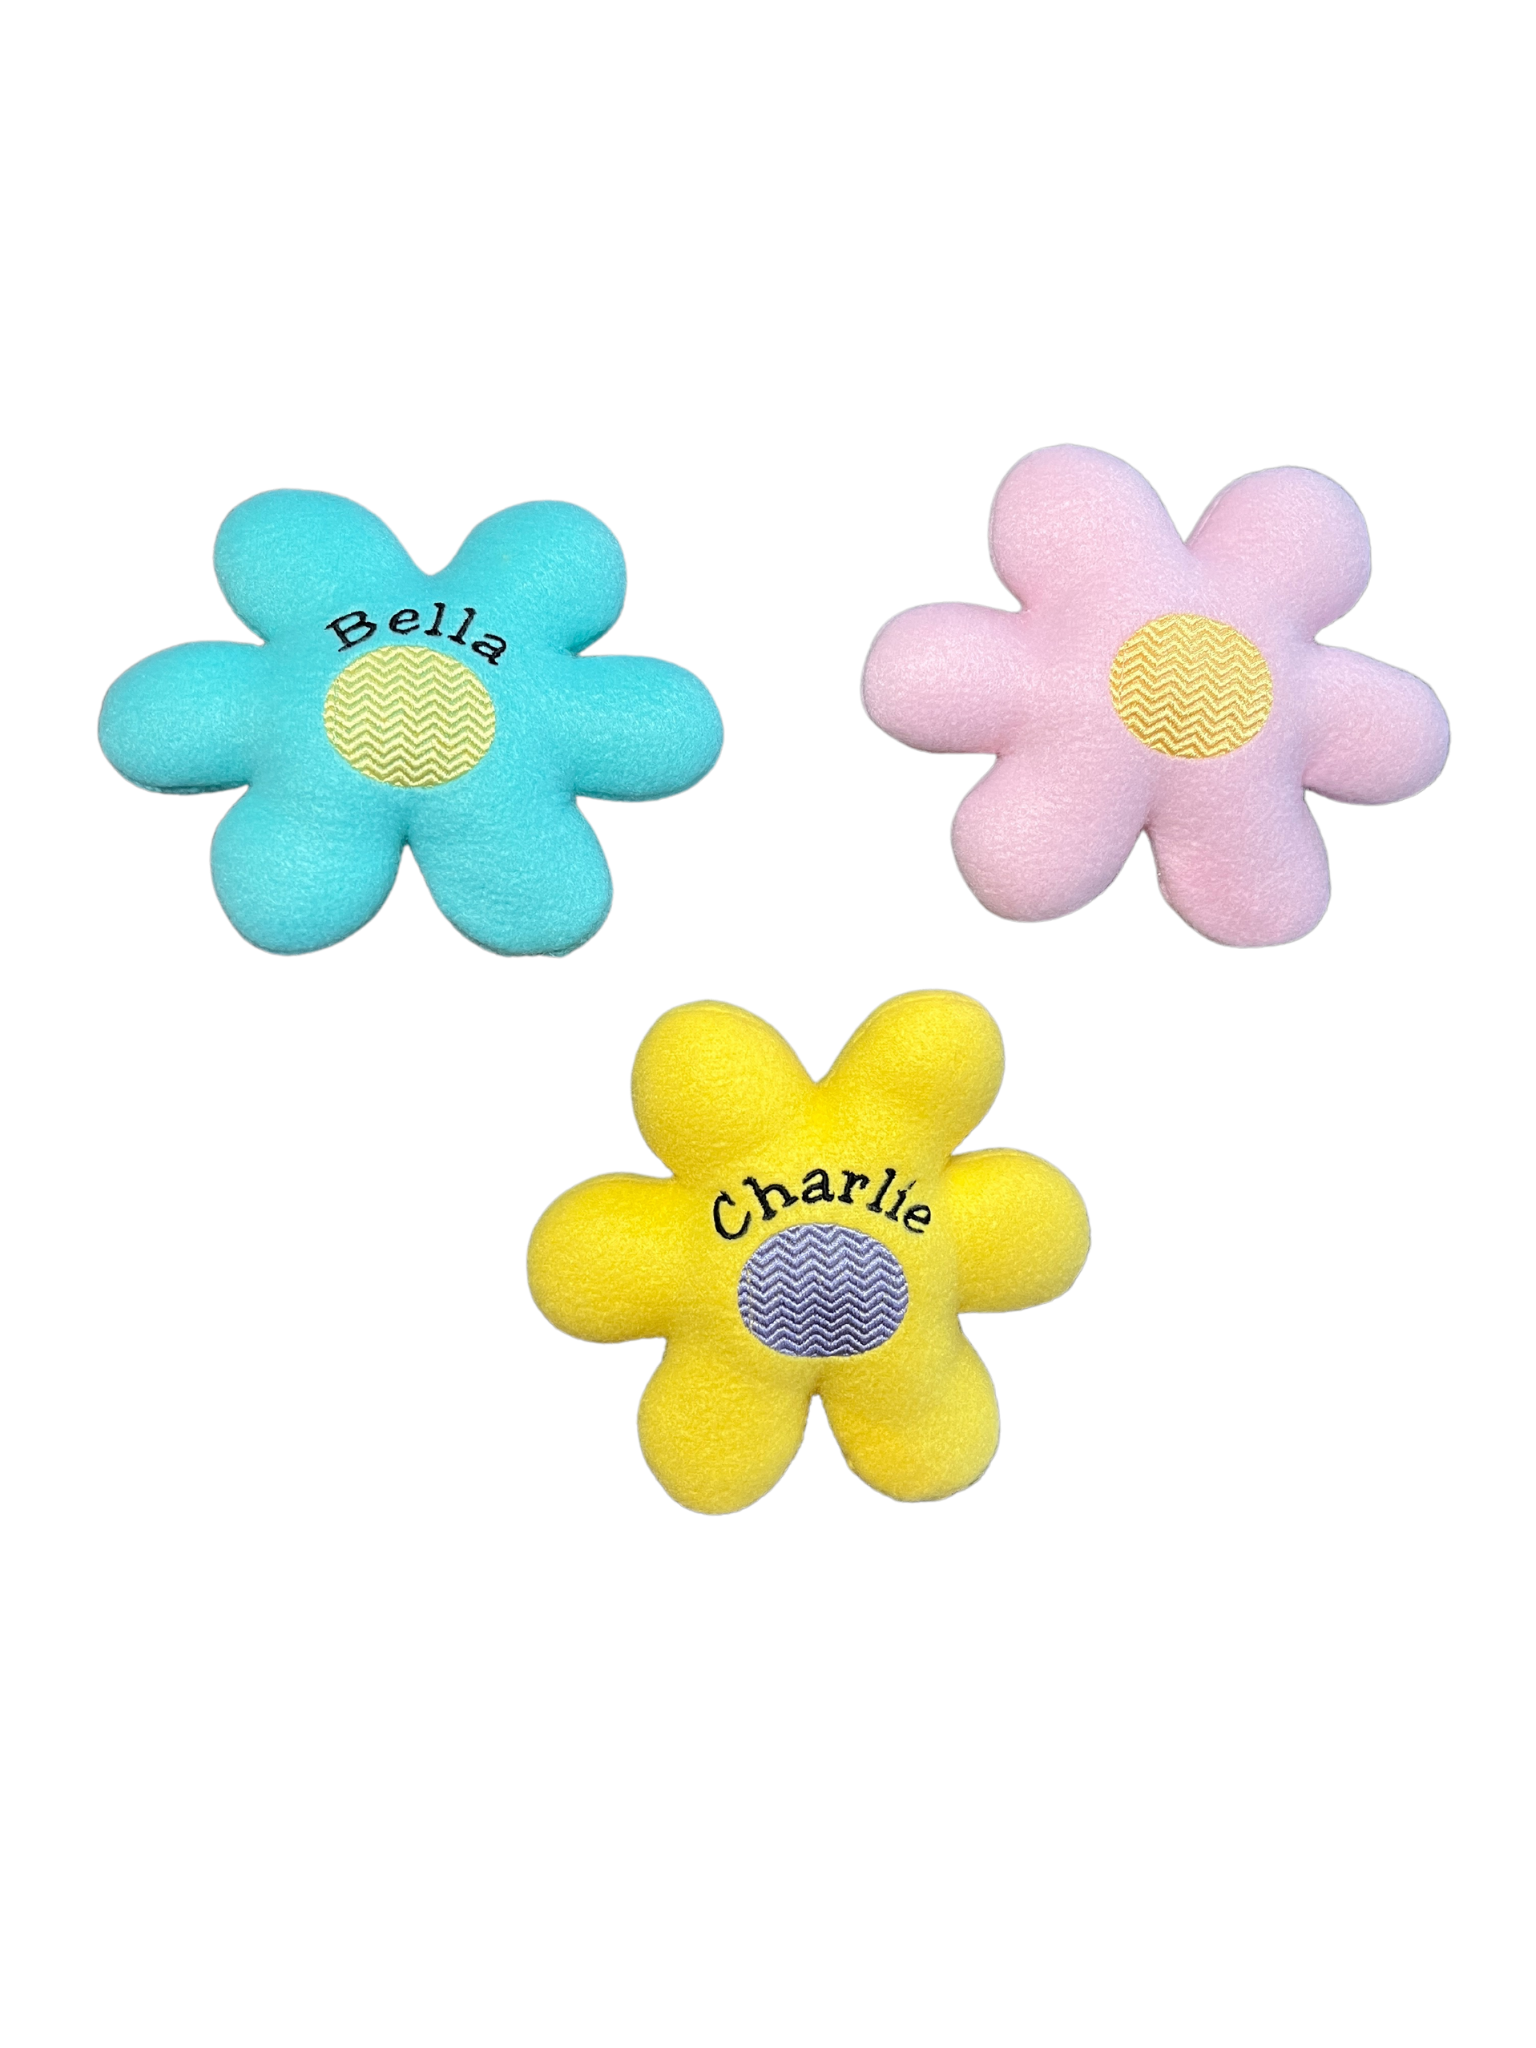 Retro Daisy Dog Toy- Personalized Handmade Custom Flower Dog Toy